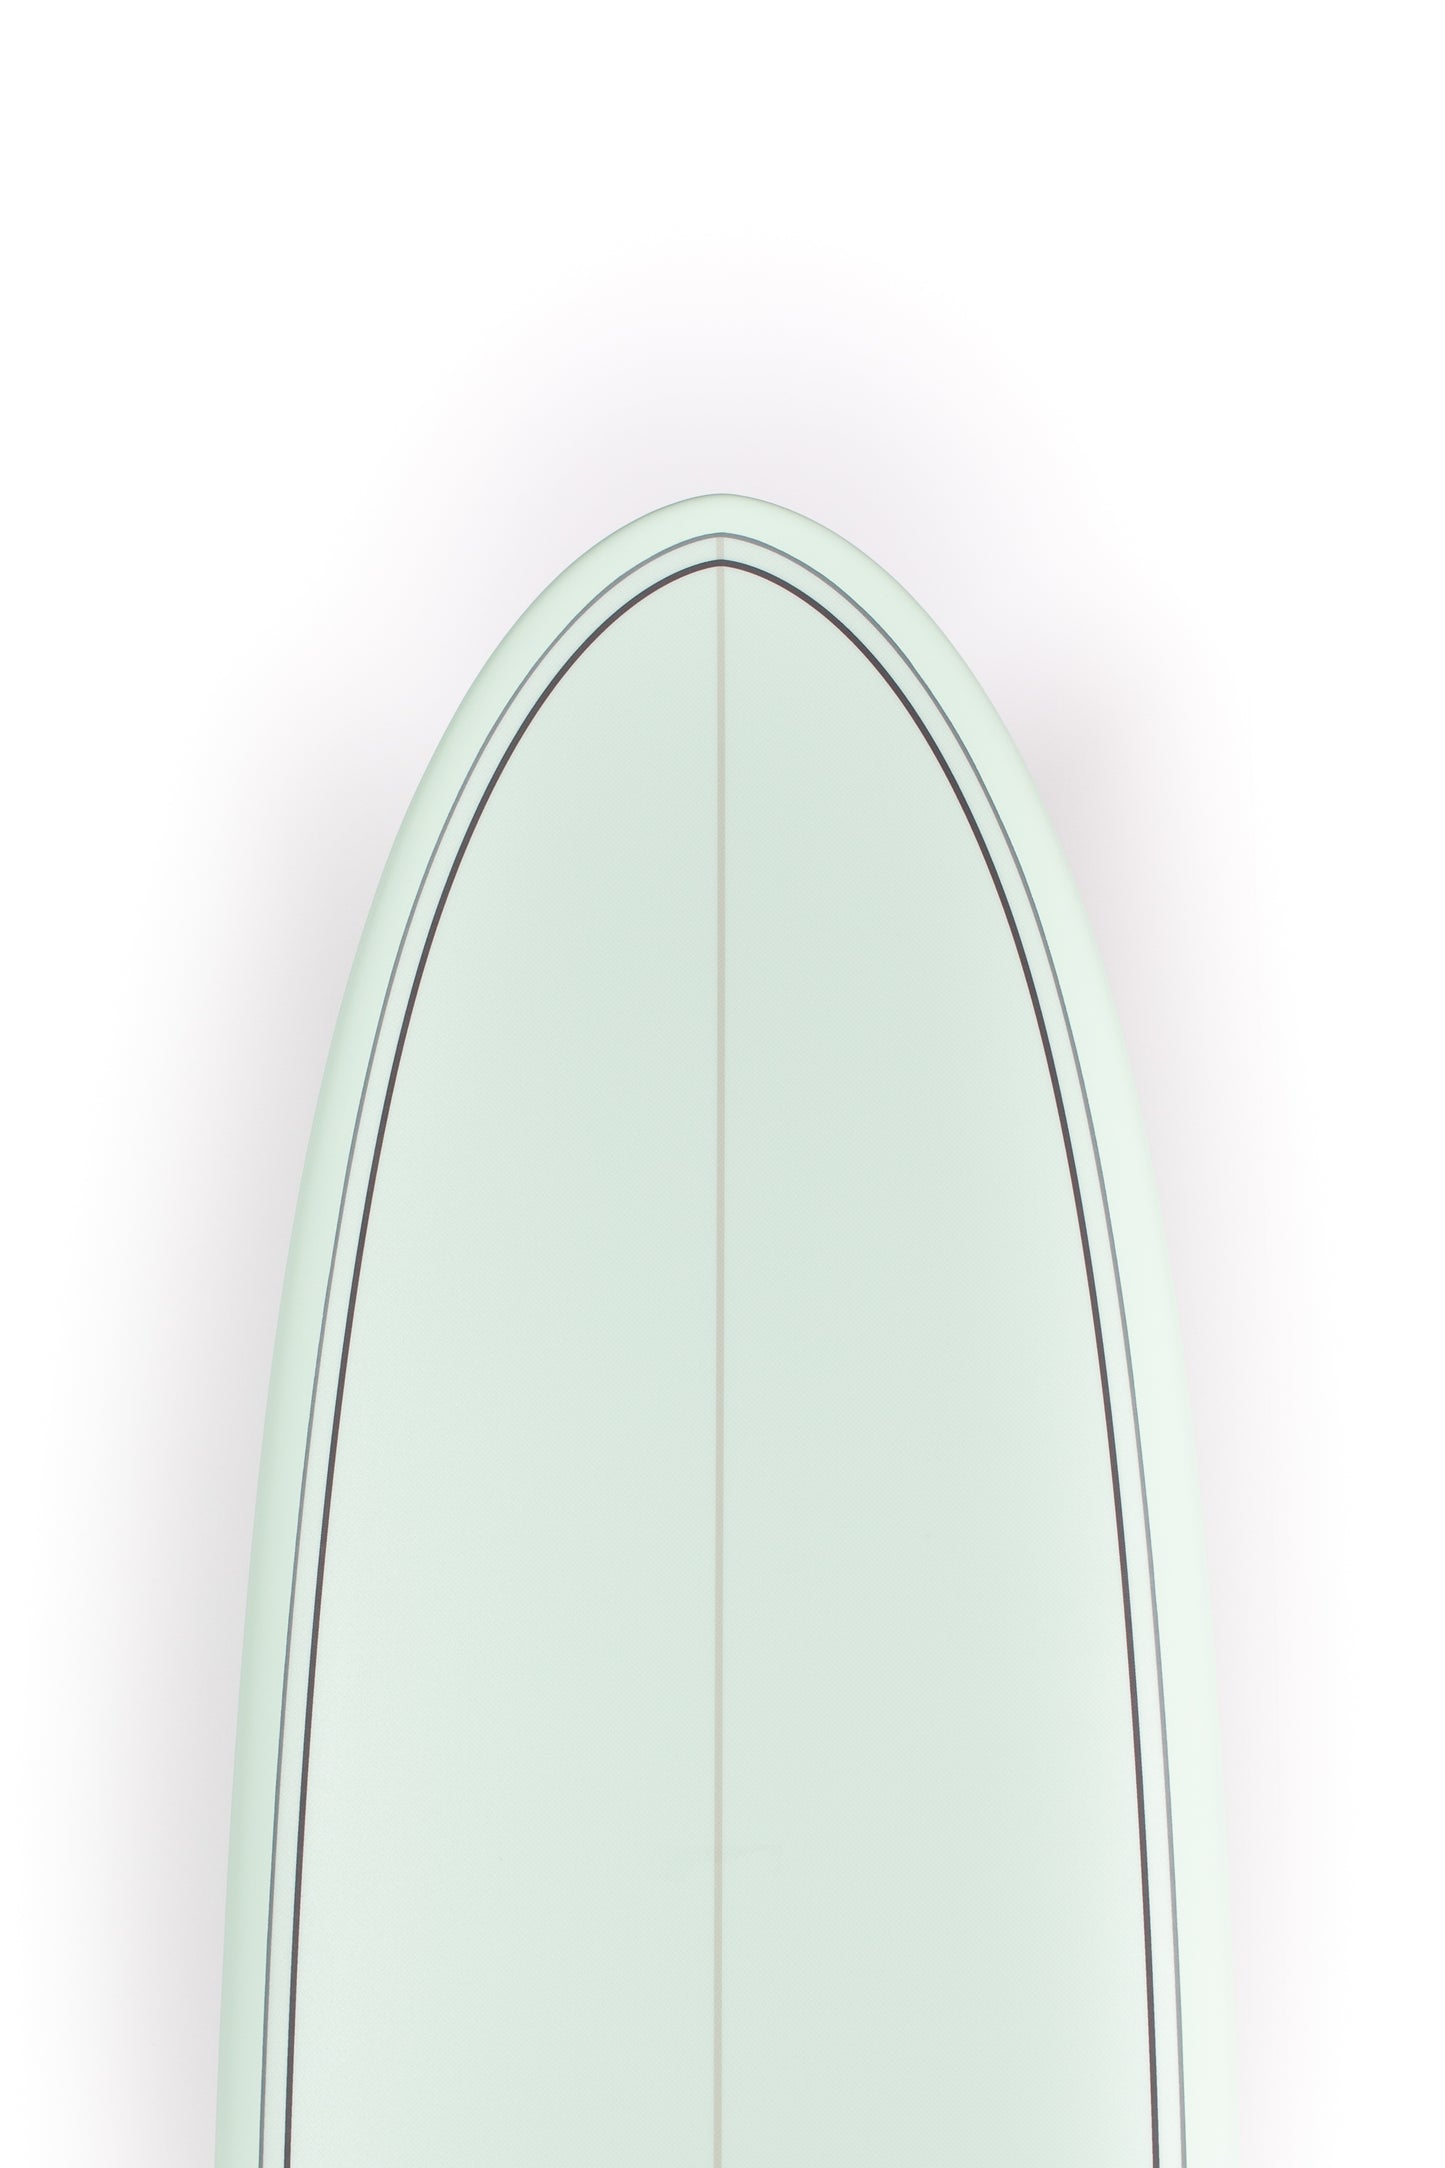 
                  
                    Pukas-Surf-Shop-Torq-Surfboards-Fun-7_6
                  
                